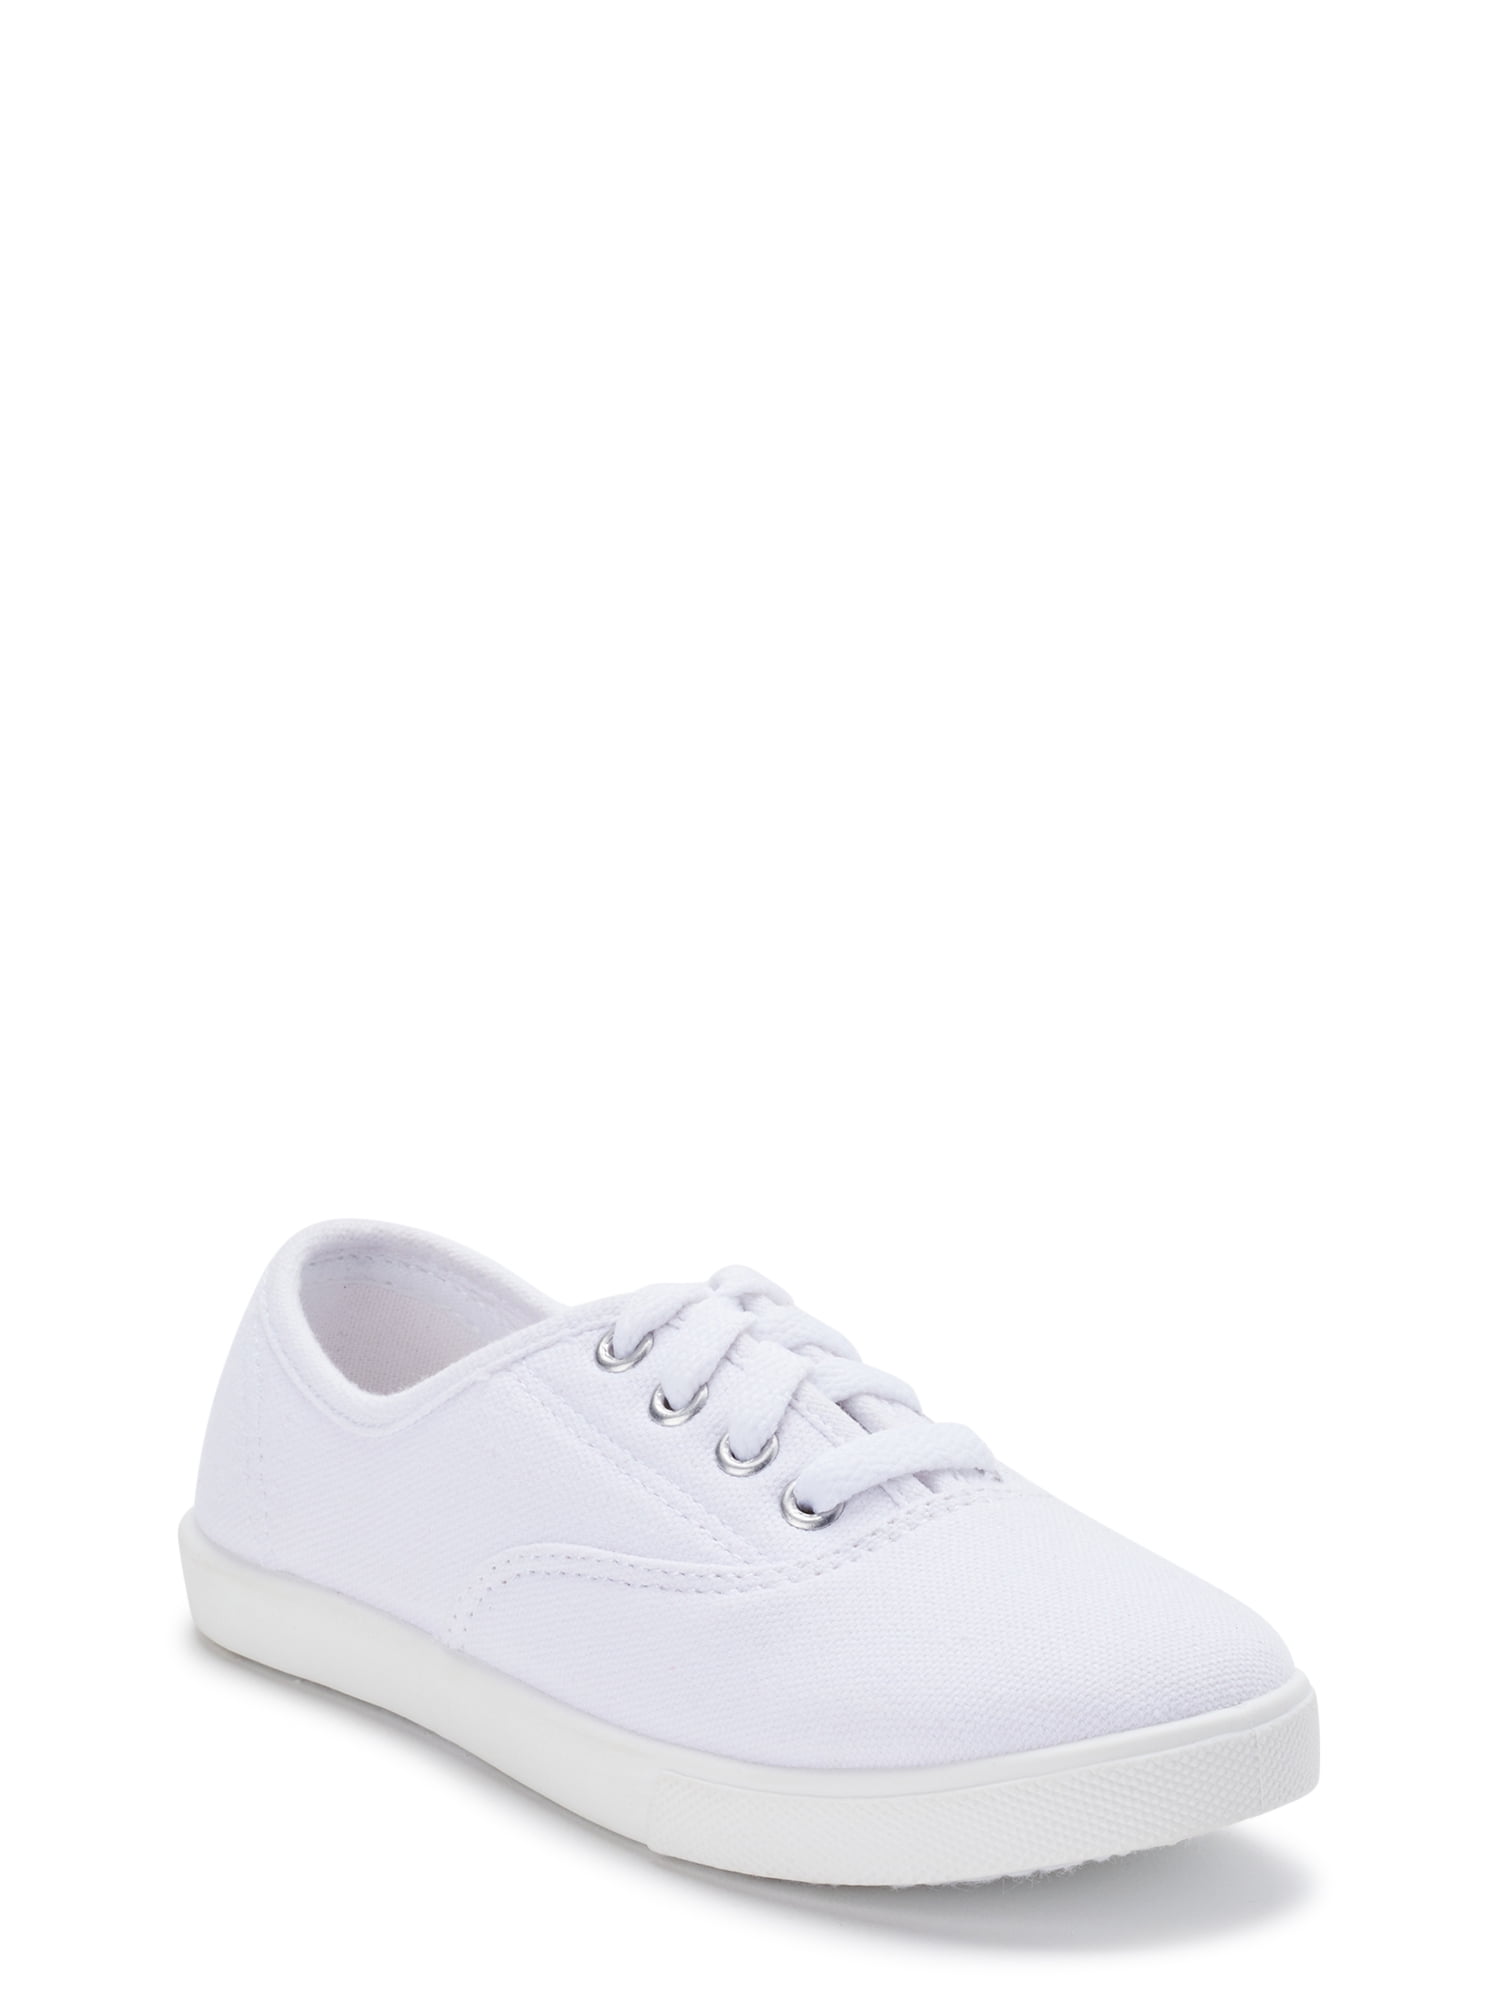 walmart white canvas shoes